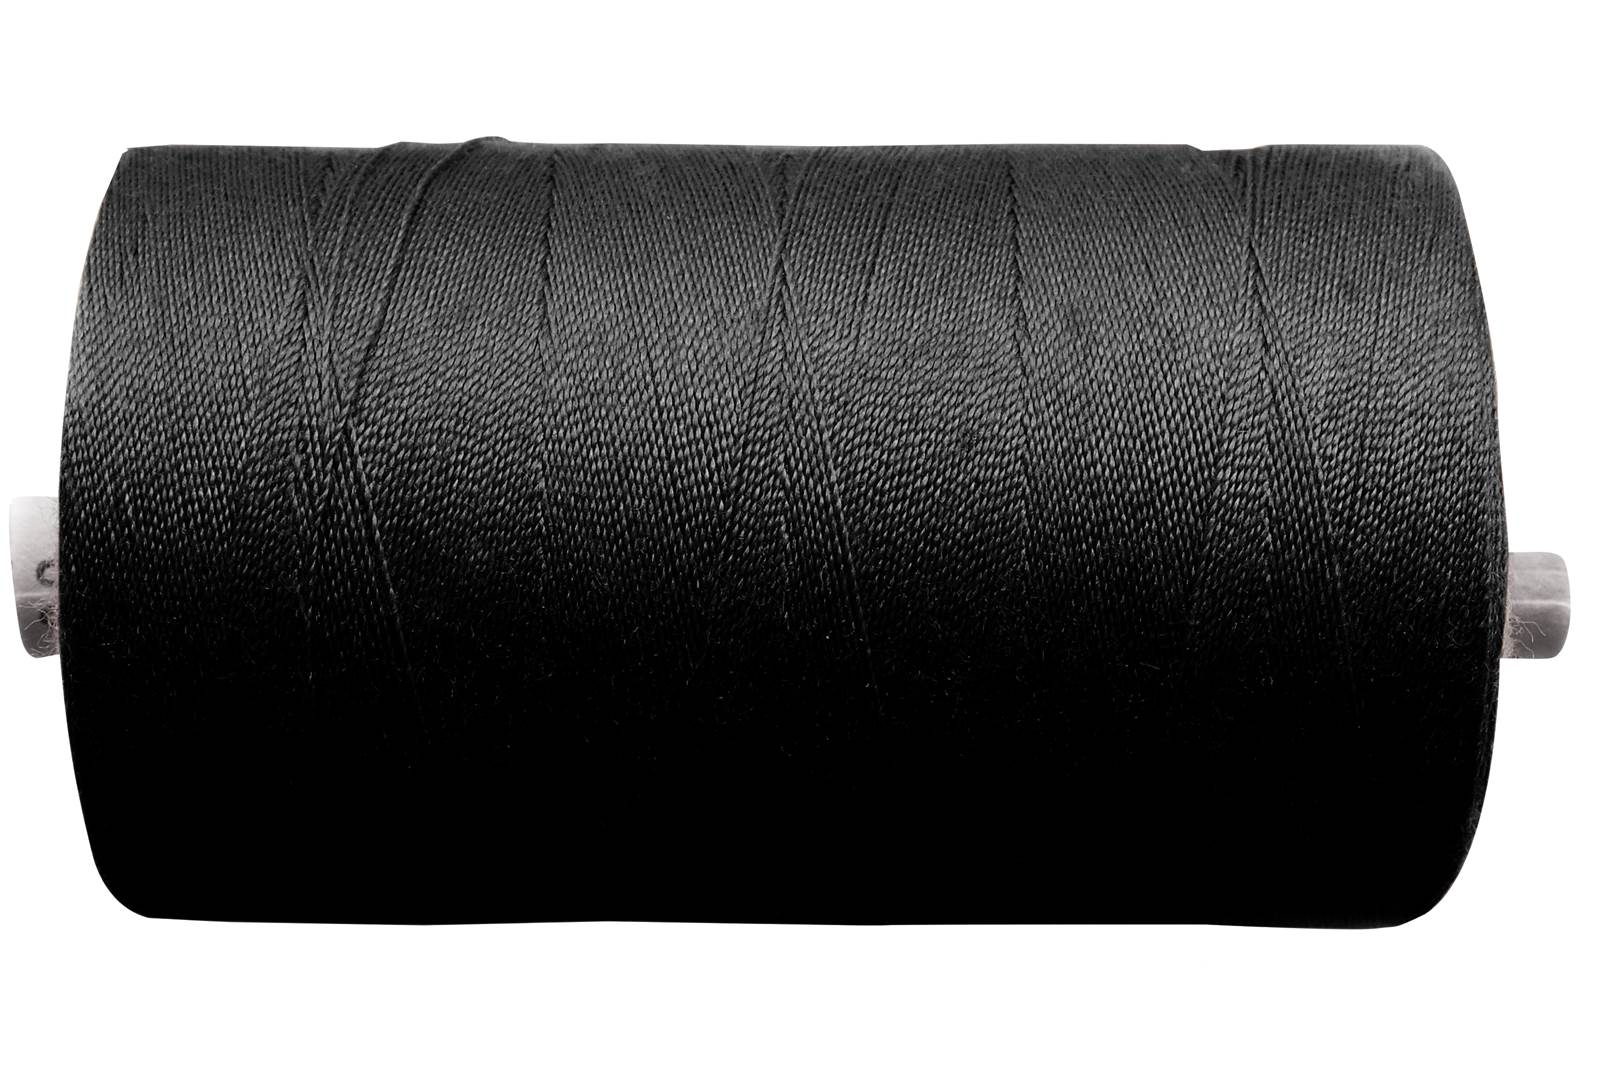 Sewing Yarn 100er - Anthracite